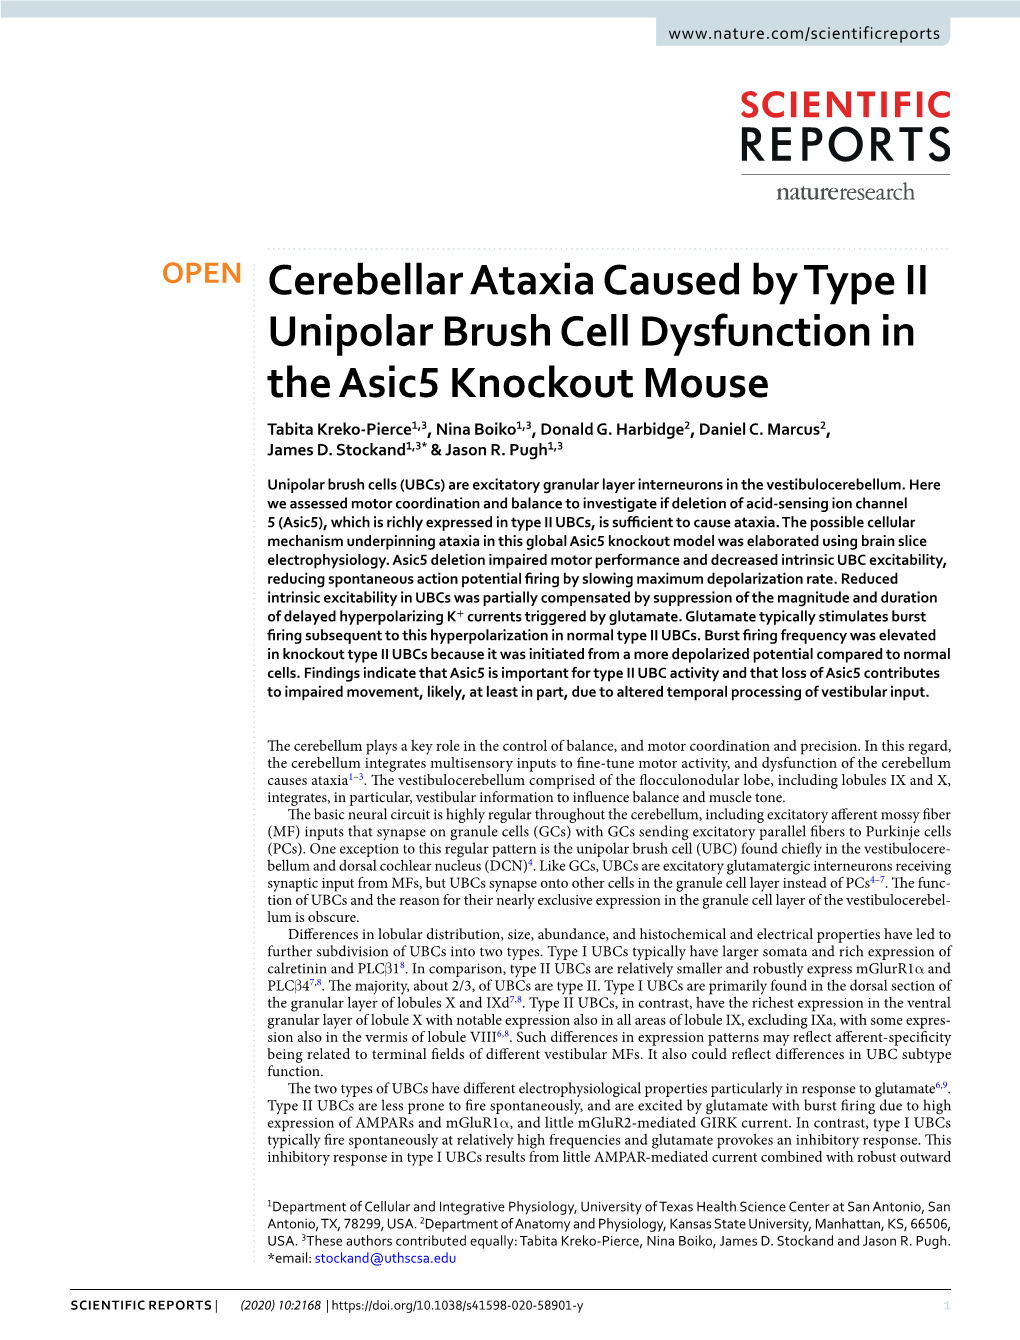 Cerebellar Ataxia Caused by Type II Unipolar Brush Cell Dysfunction in the Asic5 Knockout Mouse Tabita Kreko-Pierce1,3, Nina Boiko1,3, Donald G